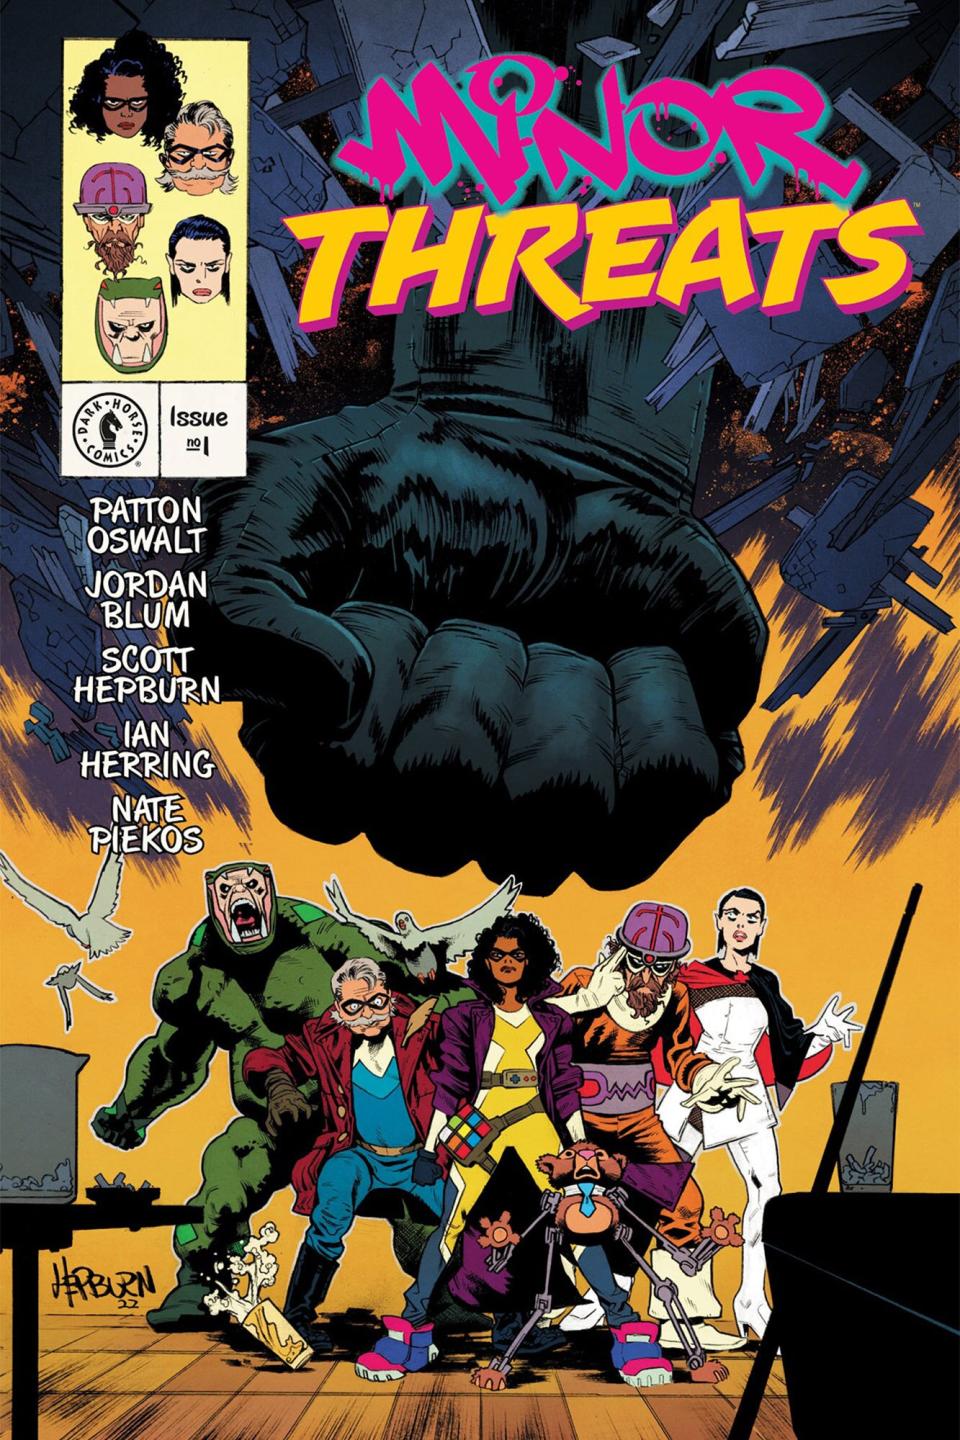 Minor Threats #1 Kindle &amp; comiXology by Patton Oswalt (Author), Jordan Blum (Author), Scott Hepburn (Cover Art, Artist), Ian Herring (Colorist) Format: Kindle Edition